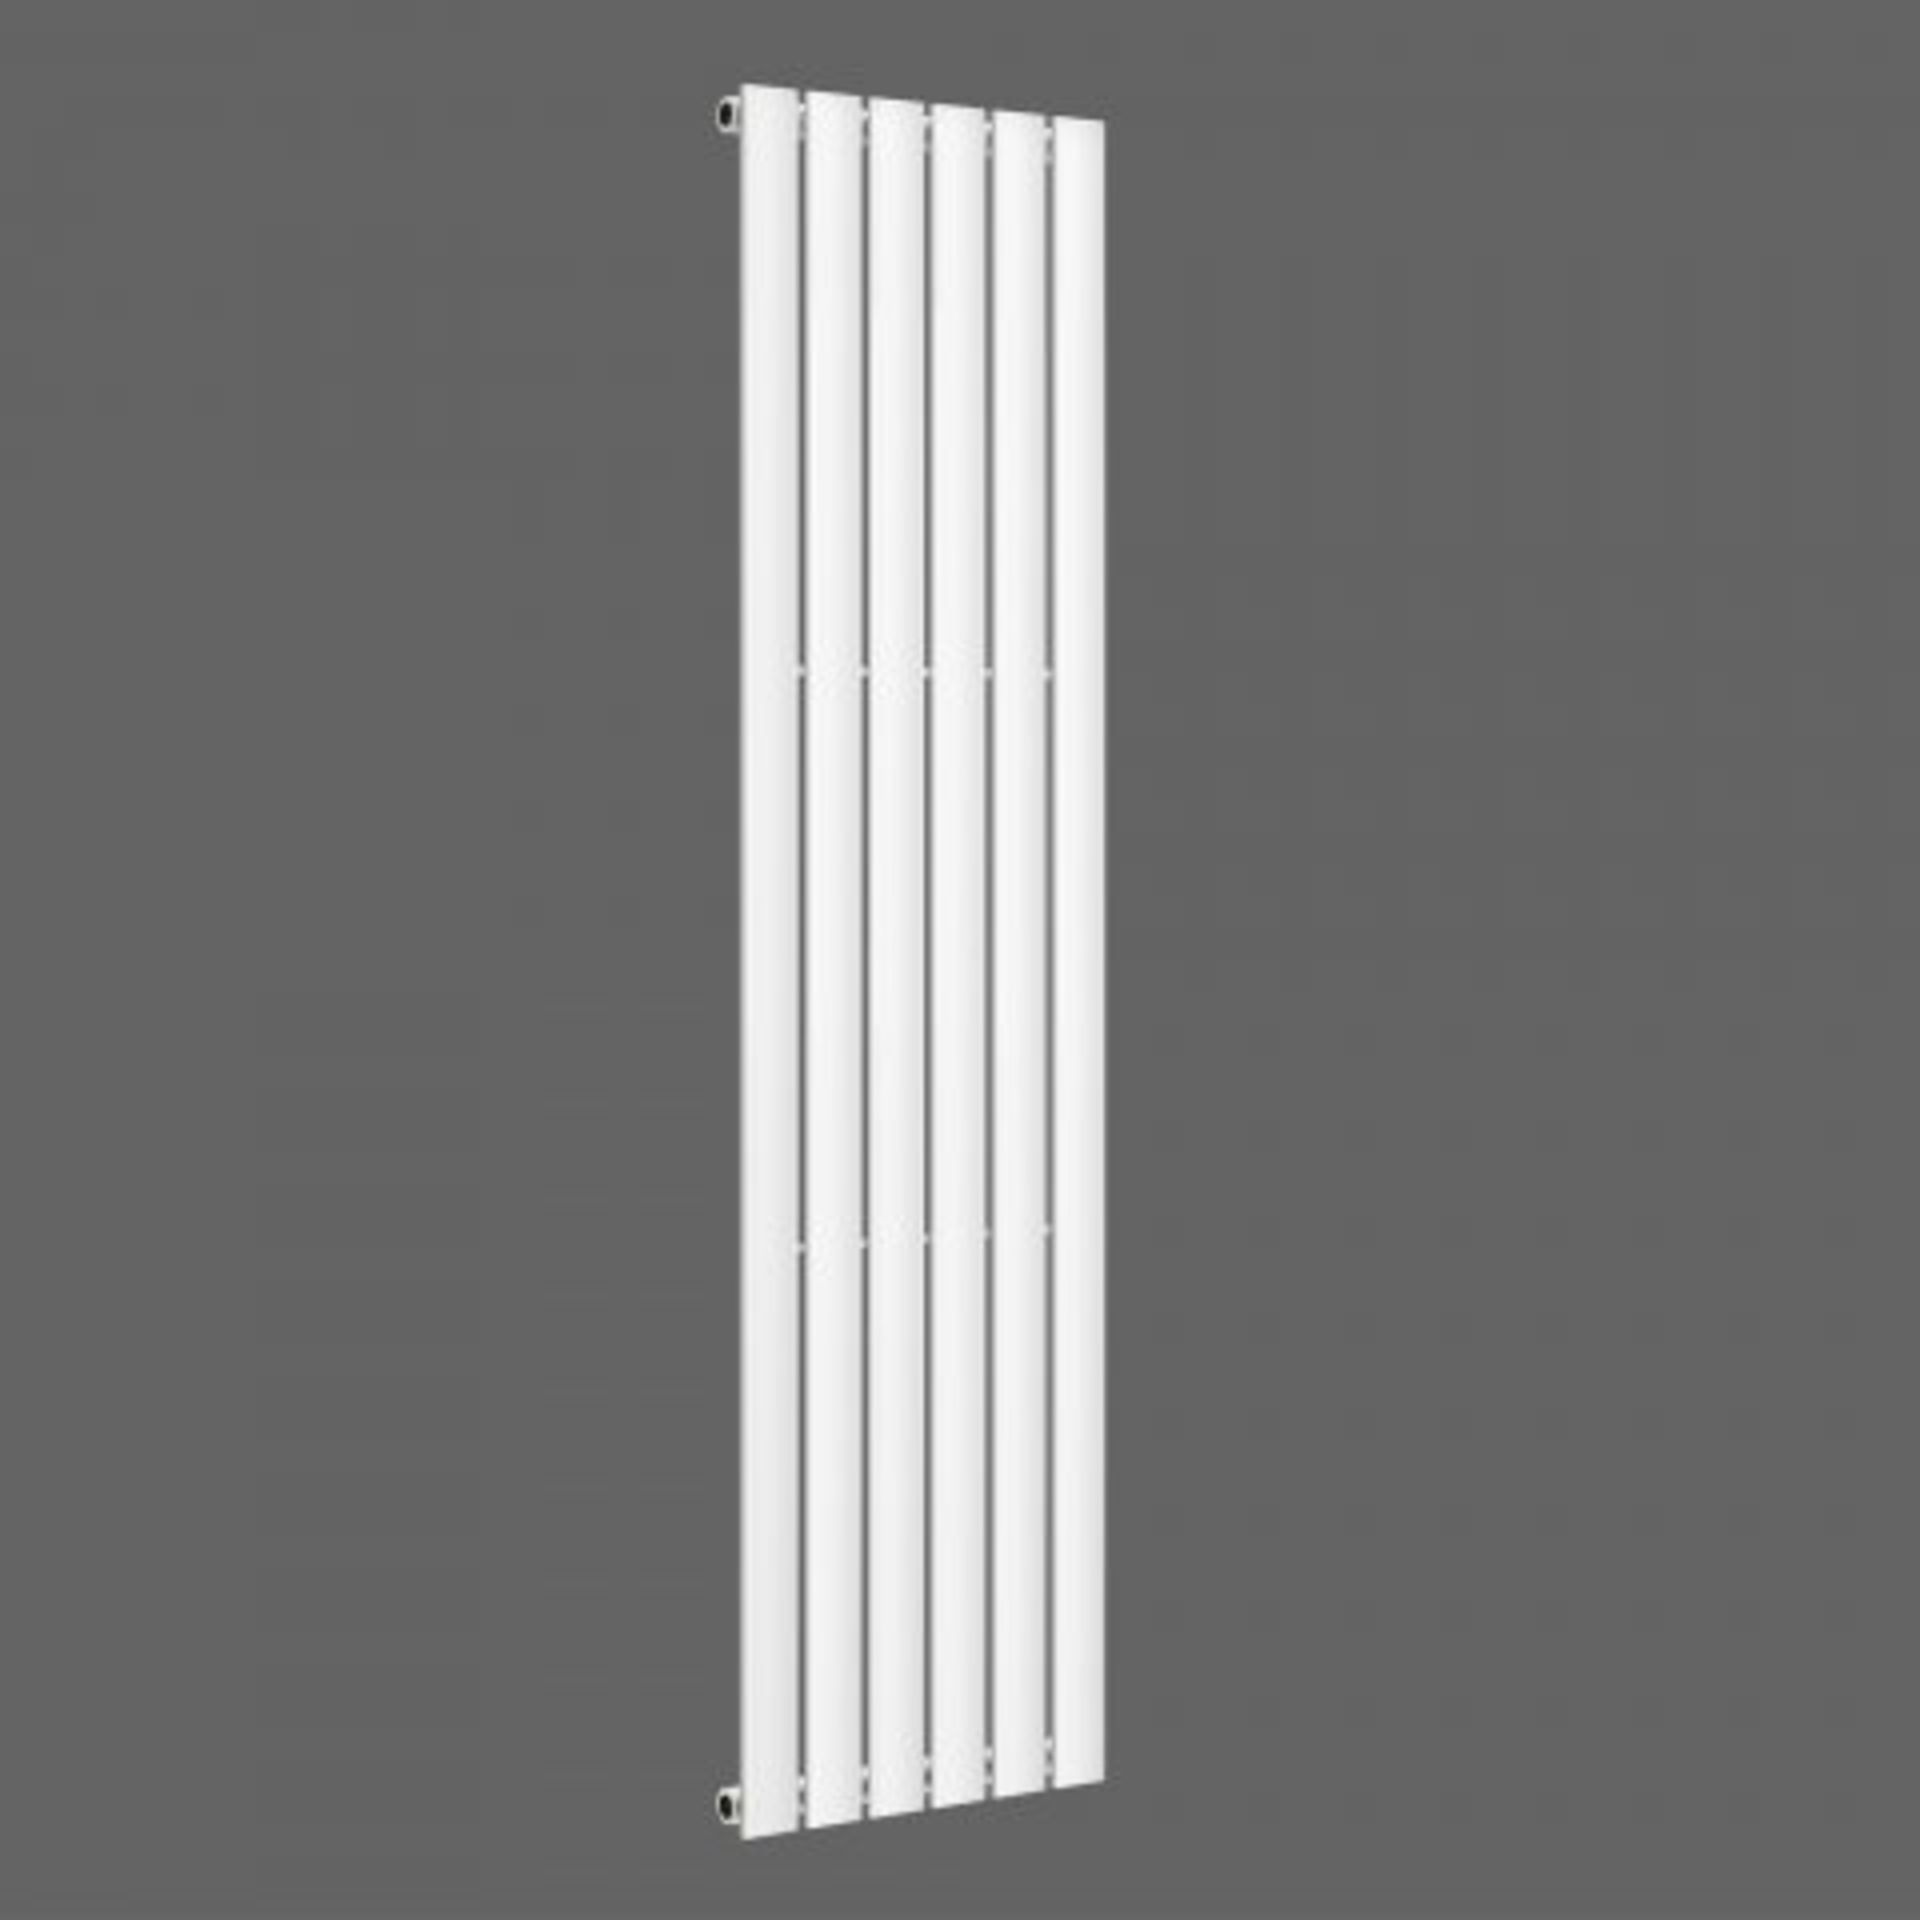 (H71) 1800x452mm Gloss White Single Flat Panel Vertical Radiator -Thera Range. RRP £255.98. - Image 2 of 3